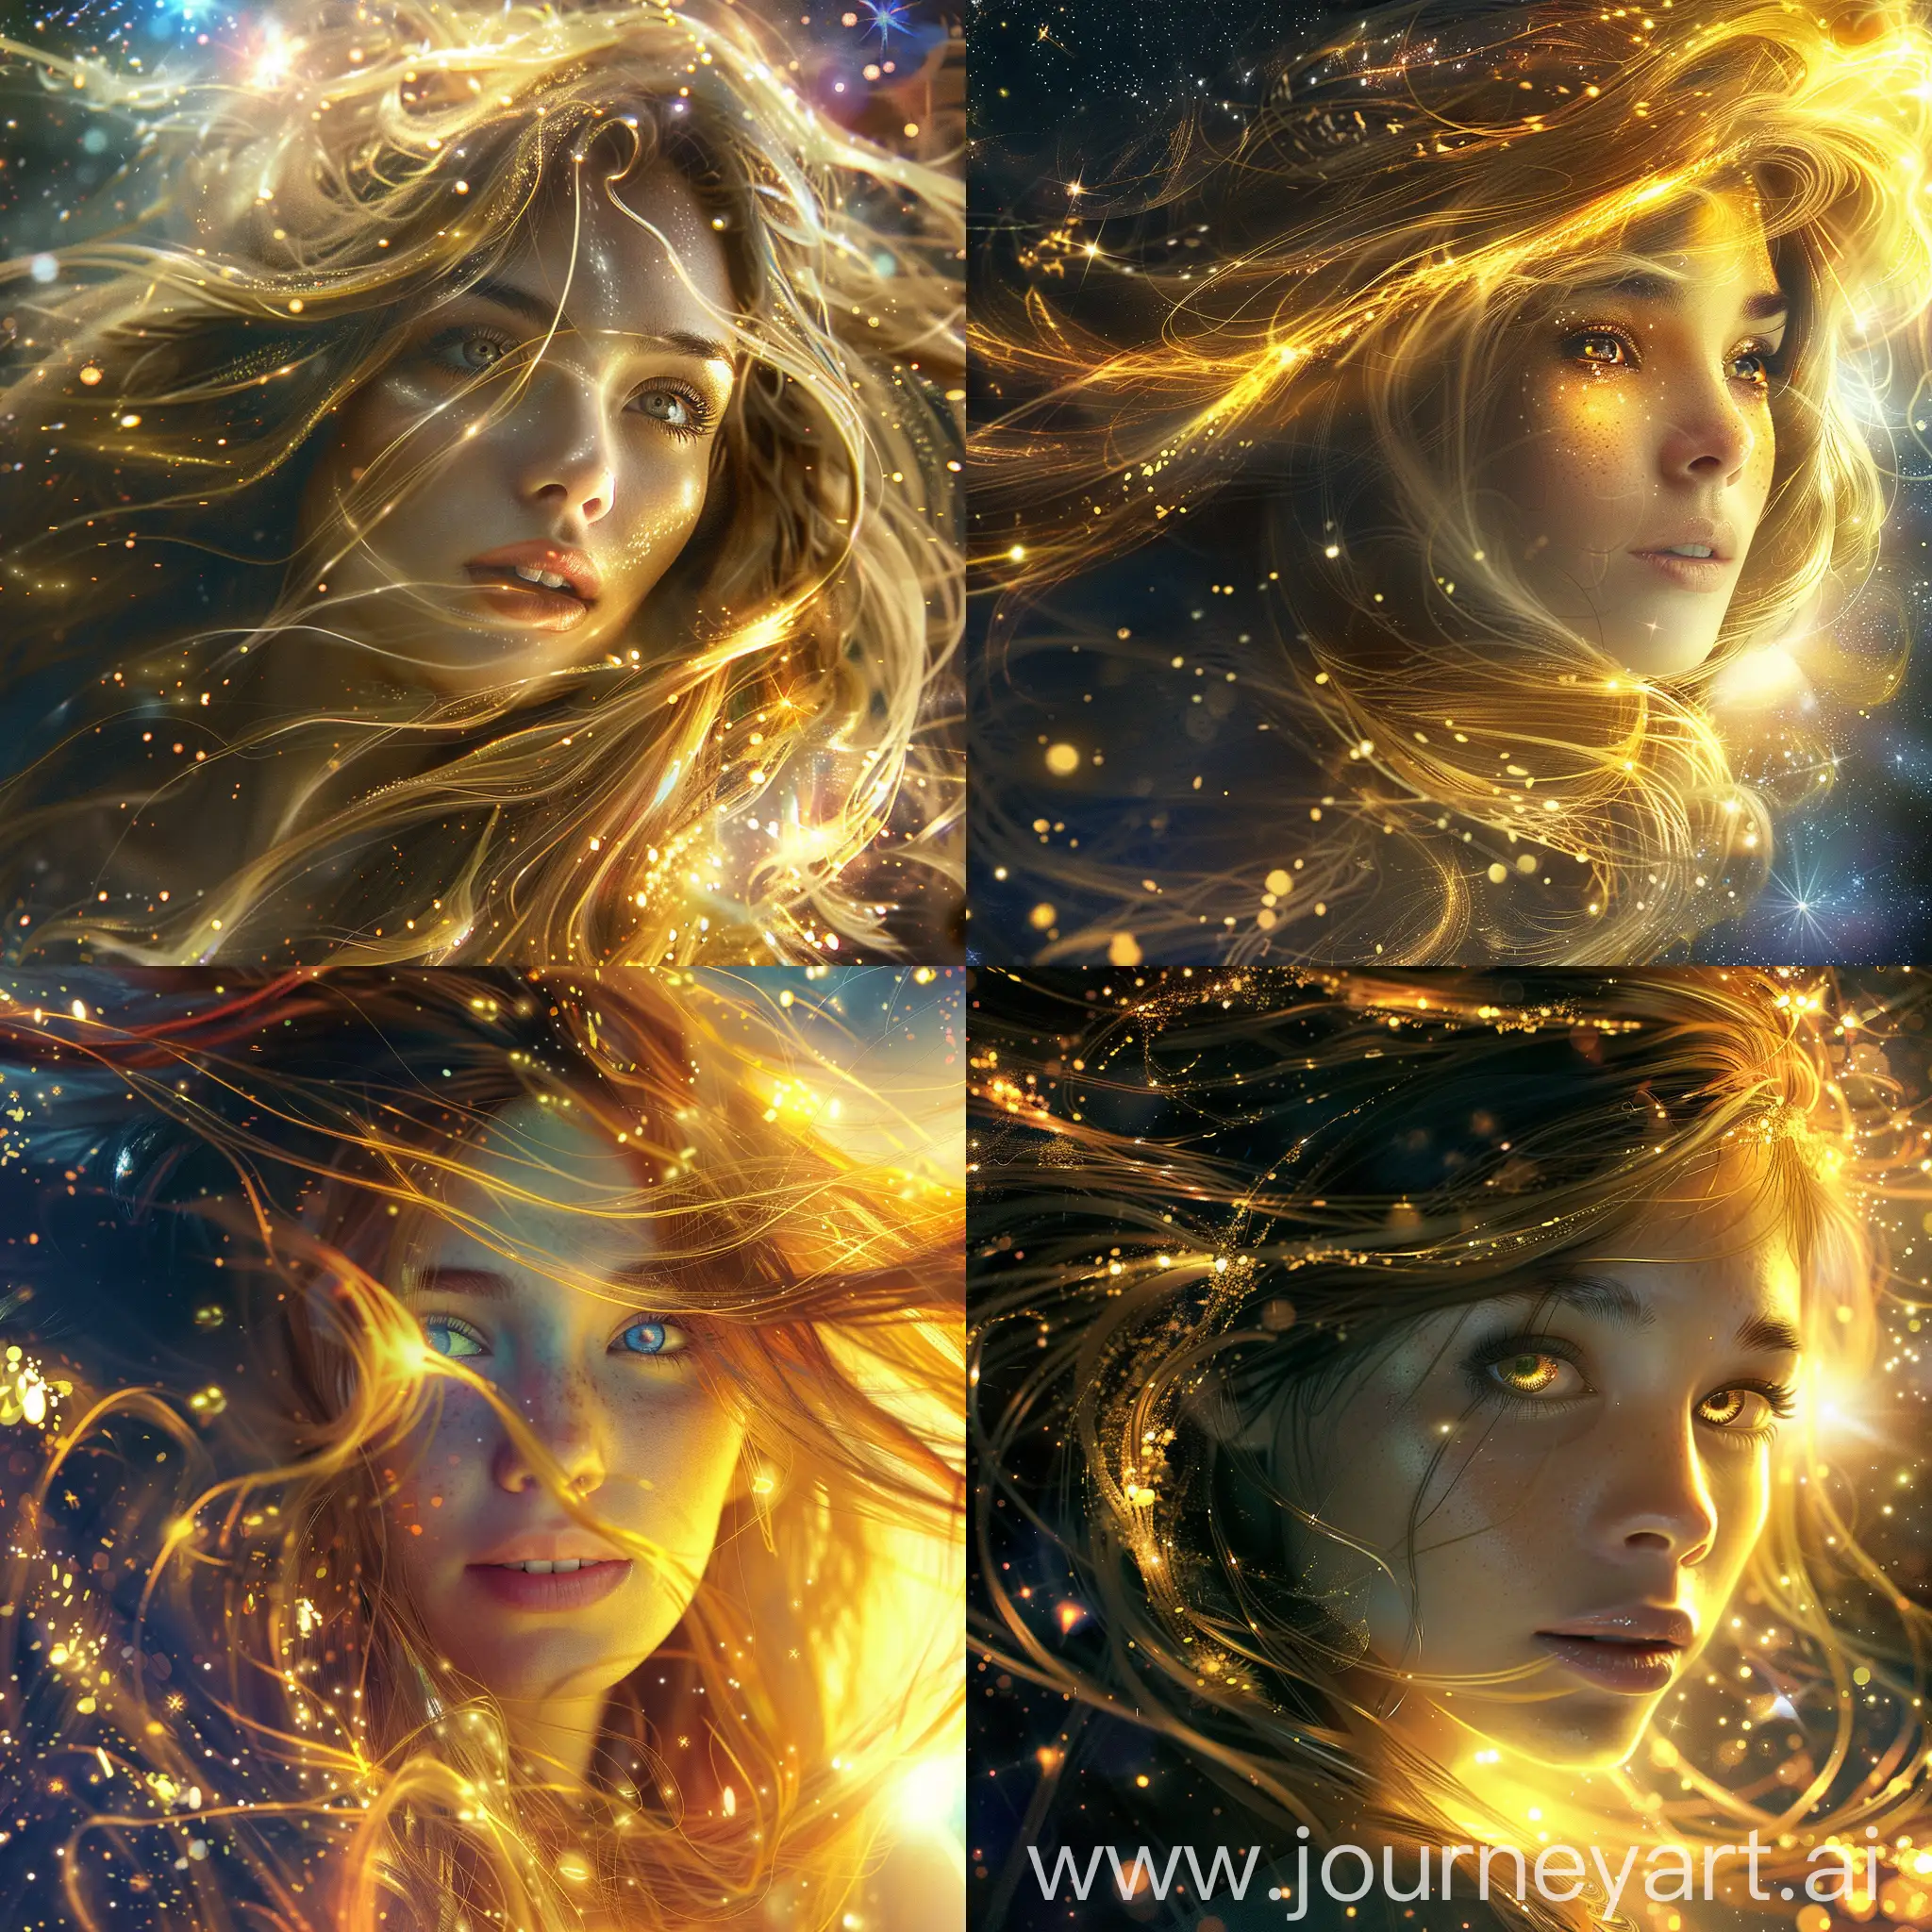 Celestial-Goddess-with-Sunlit-Hair-in-a-Nebula-Sky